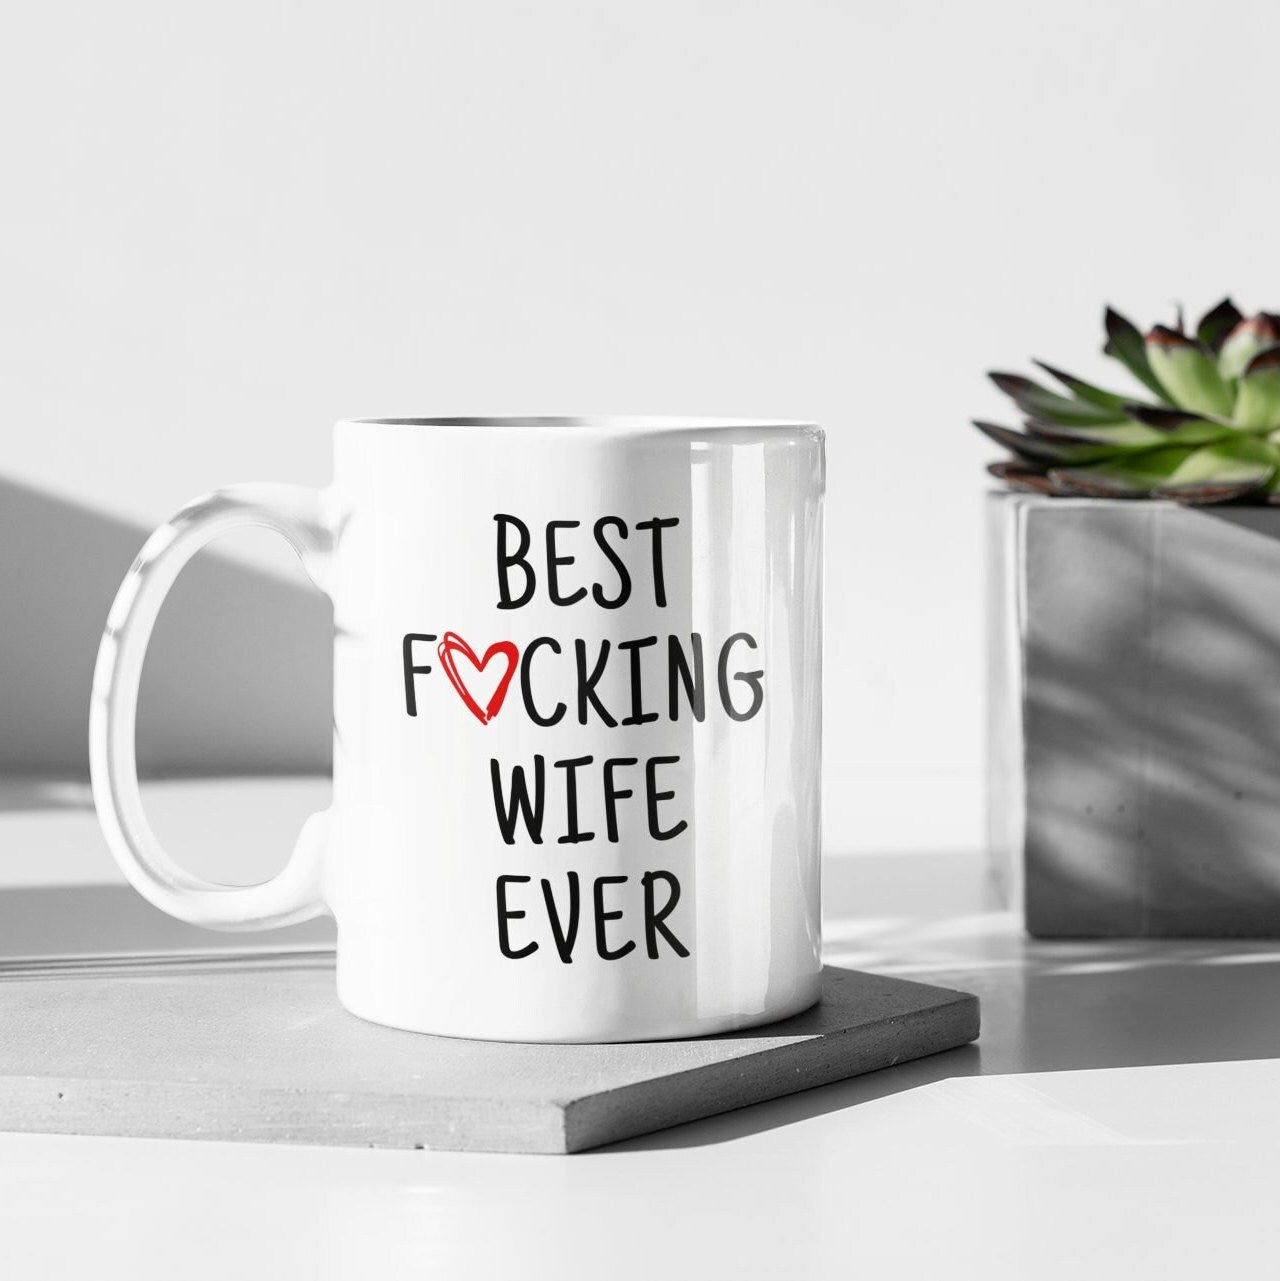 Wife Gifts, Wife Mug, Best Wife Ever, Funny Wife Gift, Wife Birthday, Wife Christmas, Gift for Wife, Wife Coffee Mug, Valentine's Gift Wife